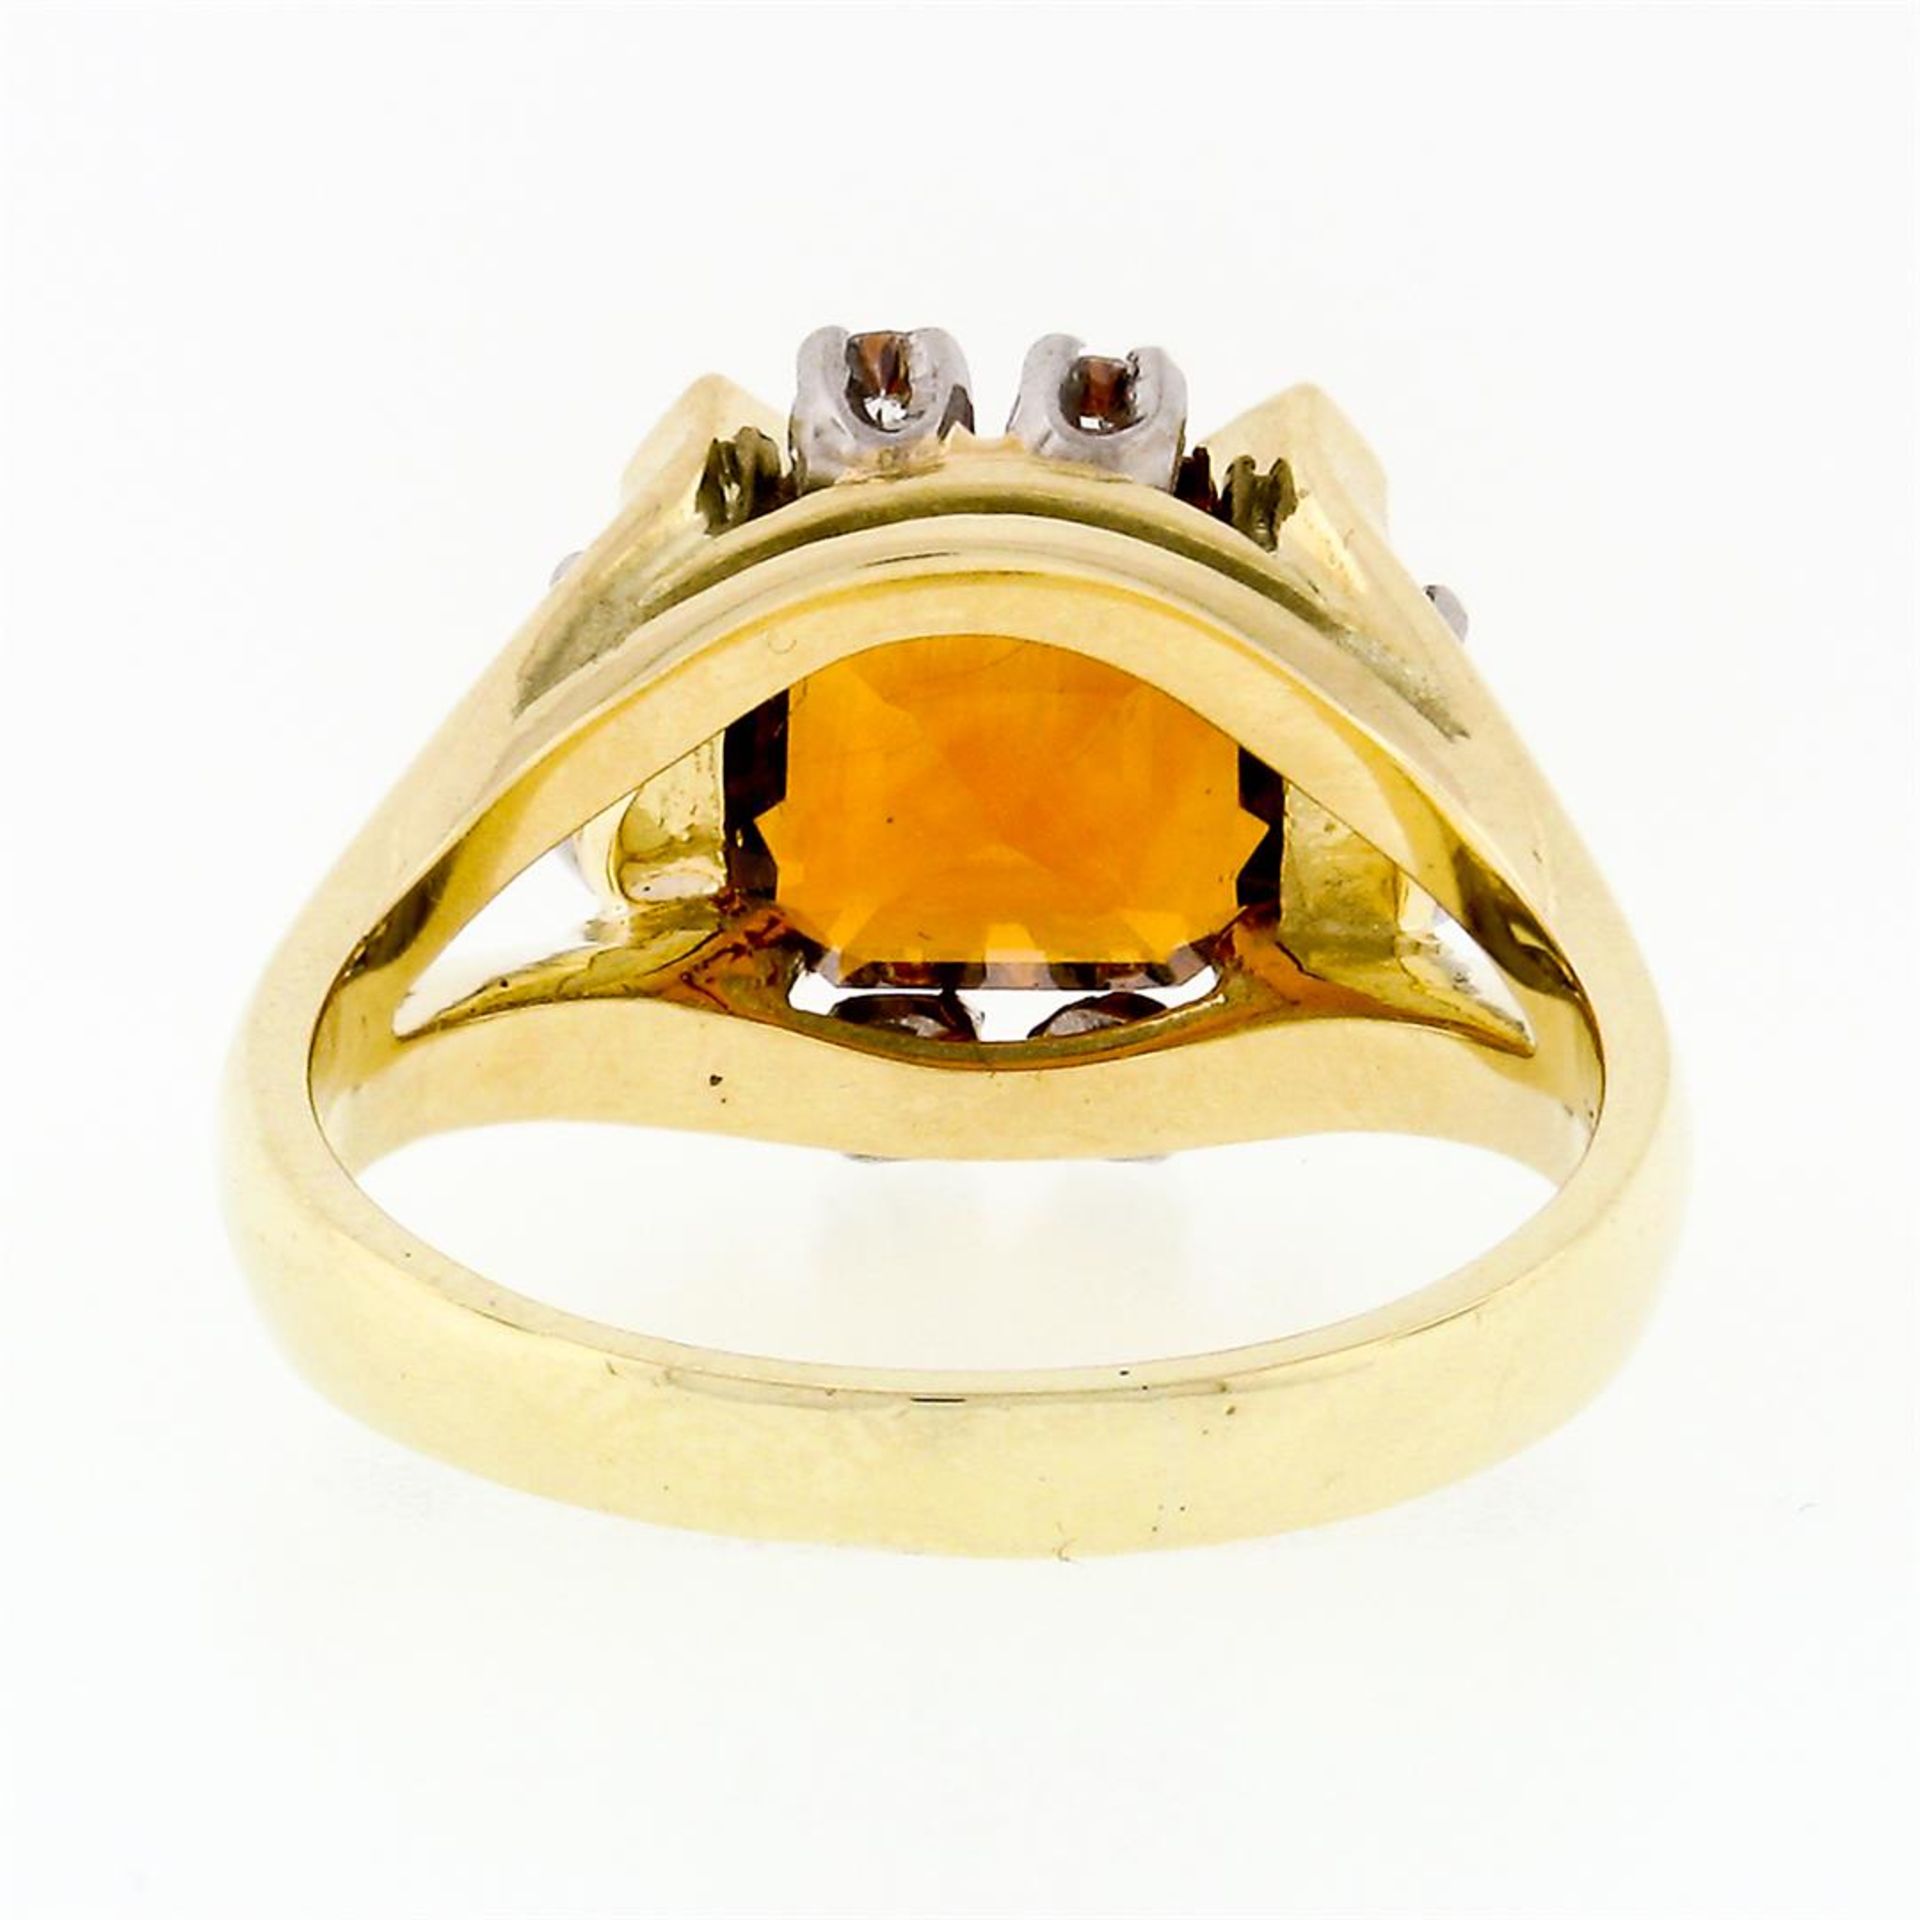 Vintage 14K Gold GIA Fine Quality Vivid Orange Step Cut Citrine & Diamond Ring - Image 7 of 9